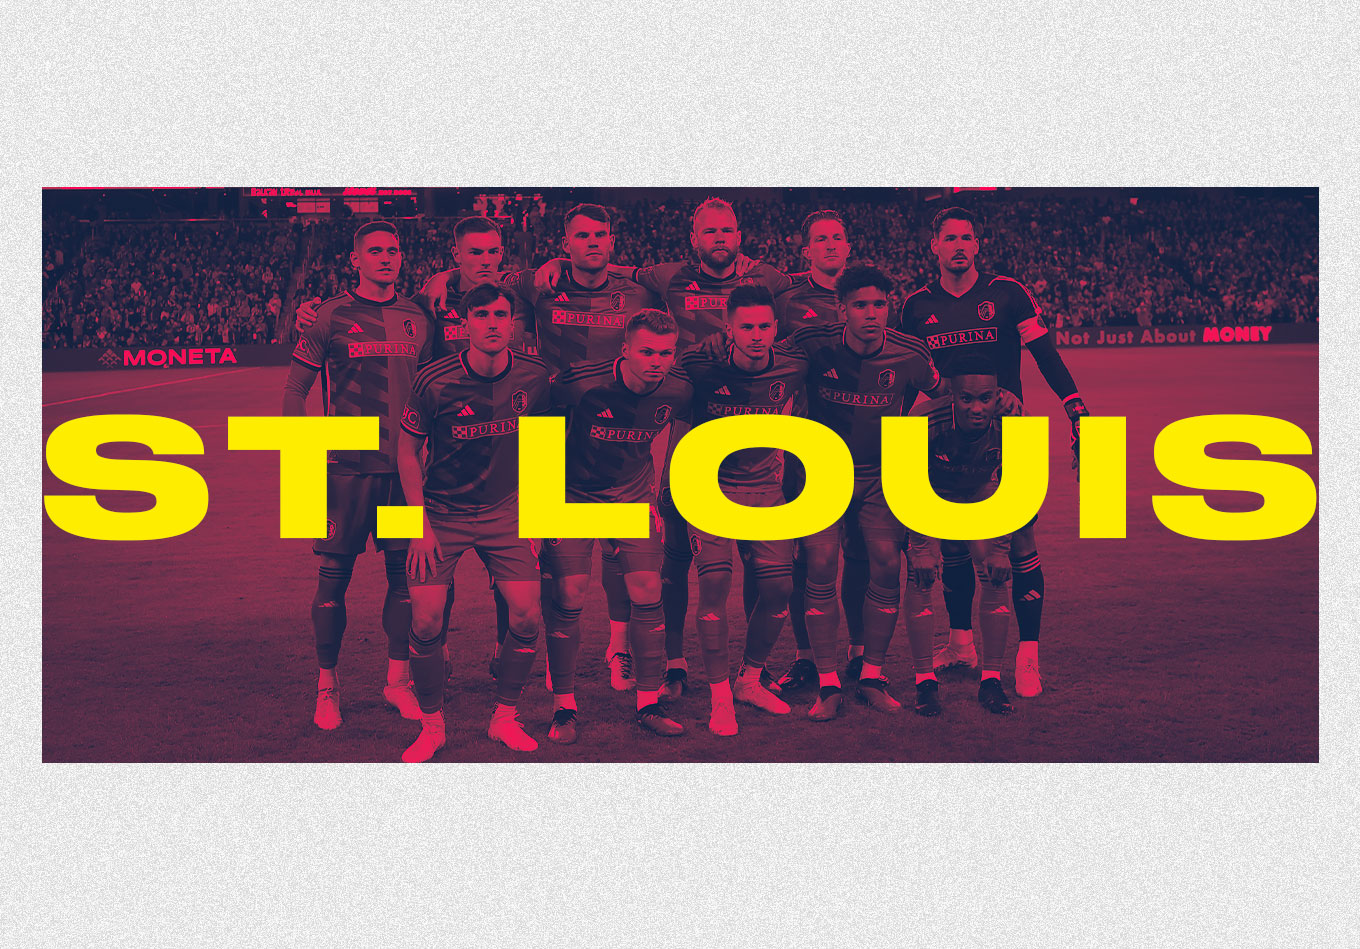 Three from Three: Analyzing St. Louis City’s Perfect MLS Start